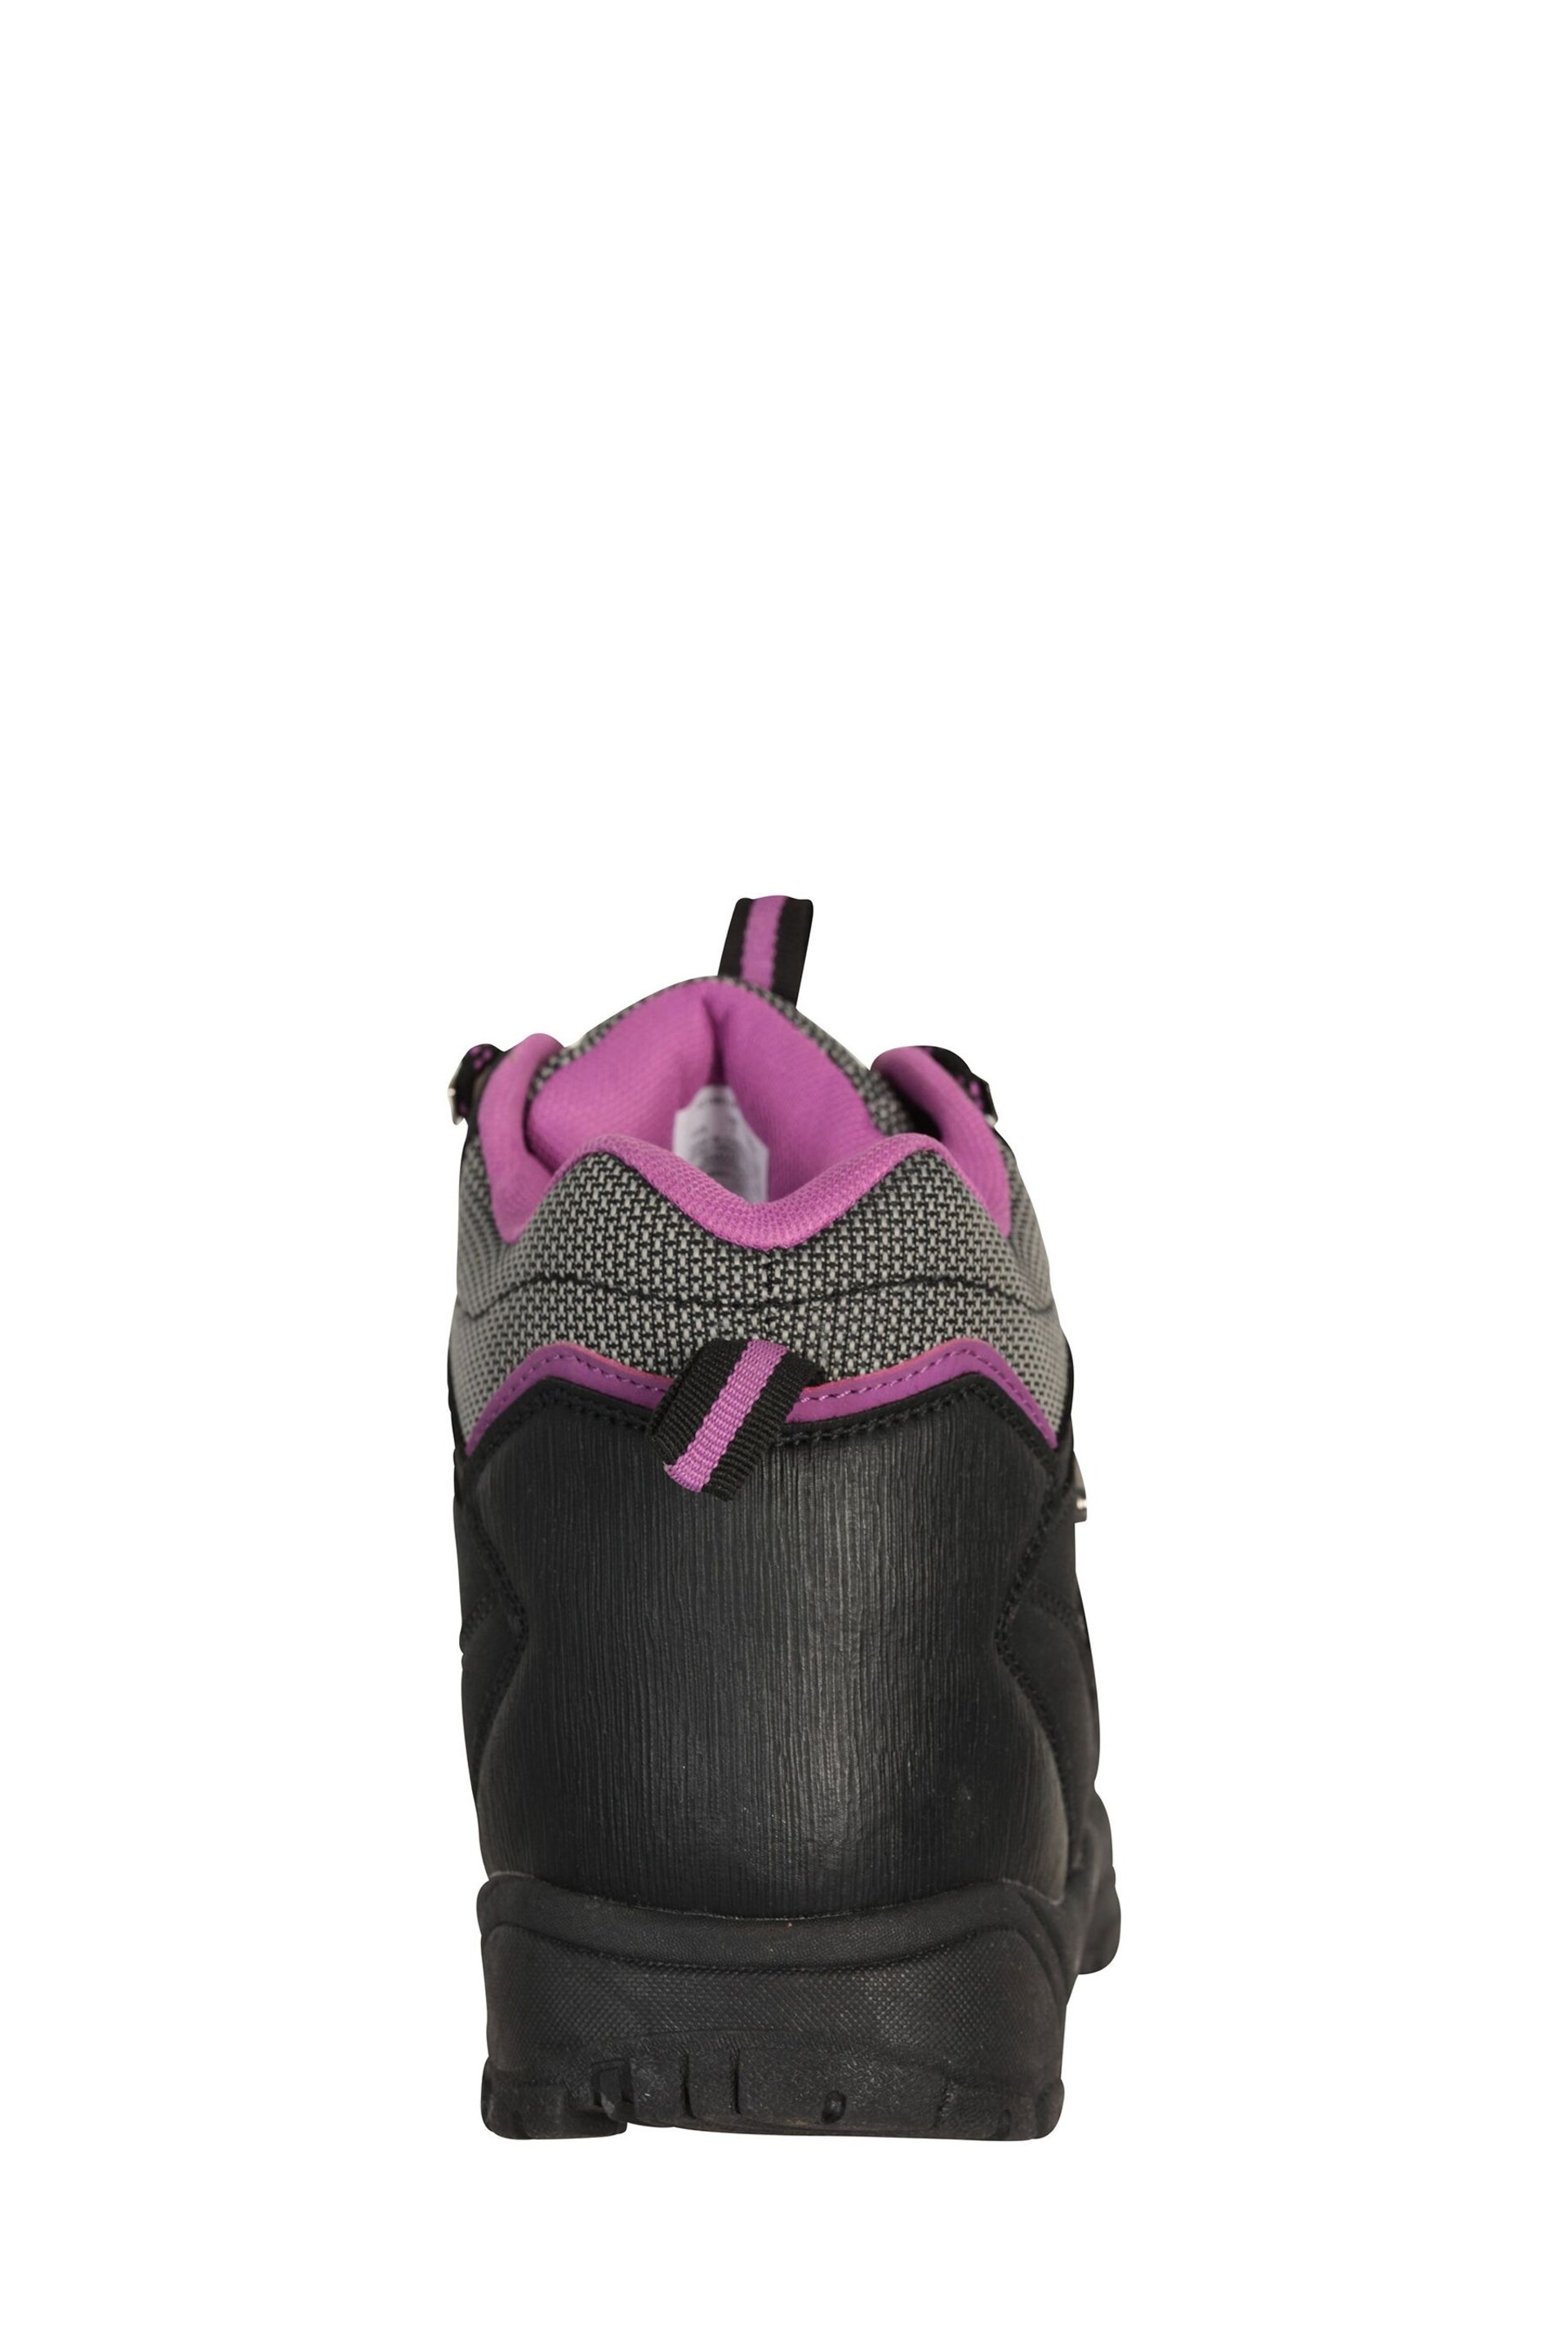 Mountain Warehouse Black Adventurer Waterproof Boots - Image 3 of 5